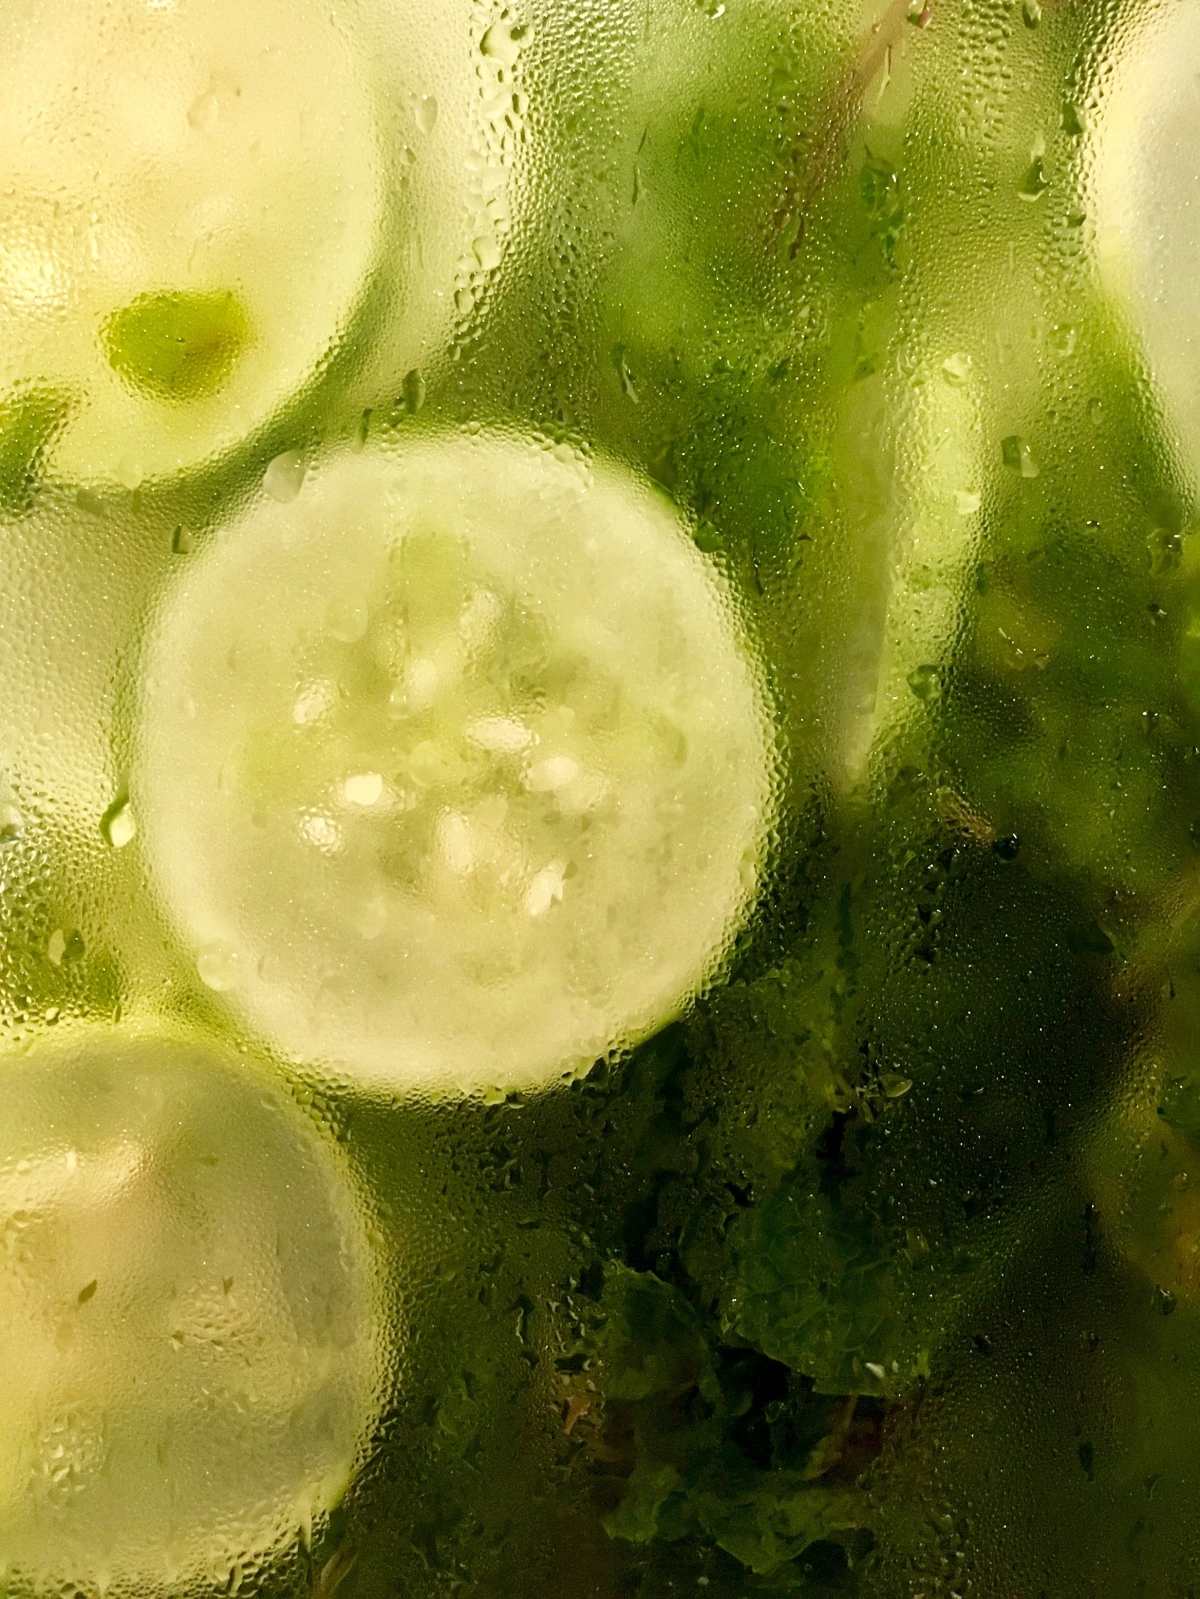 cucumber slices behind glasss